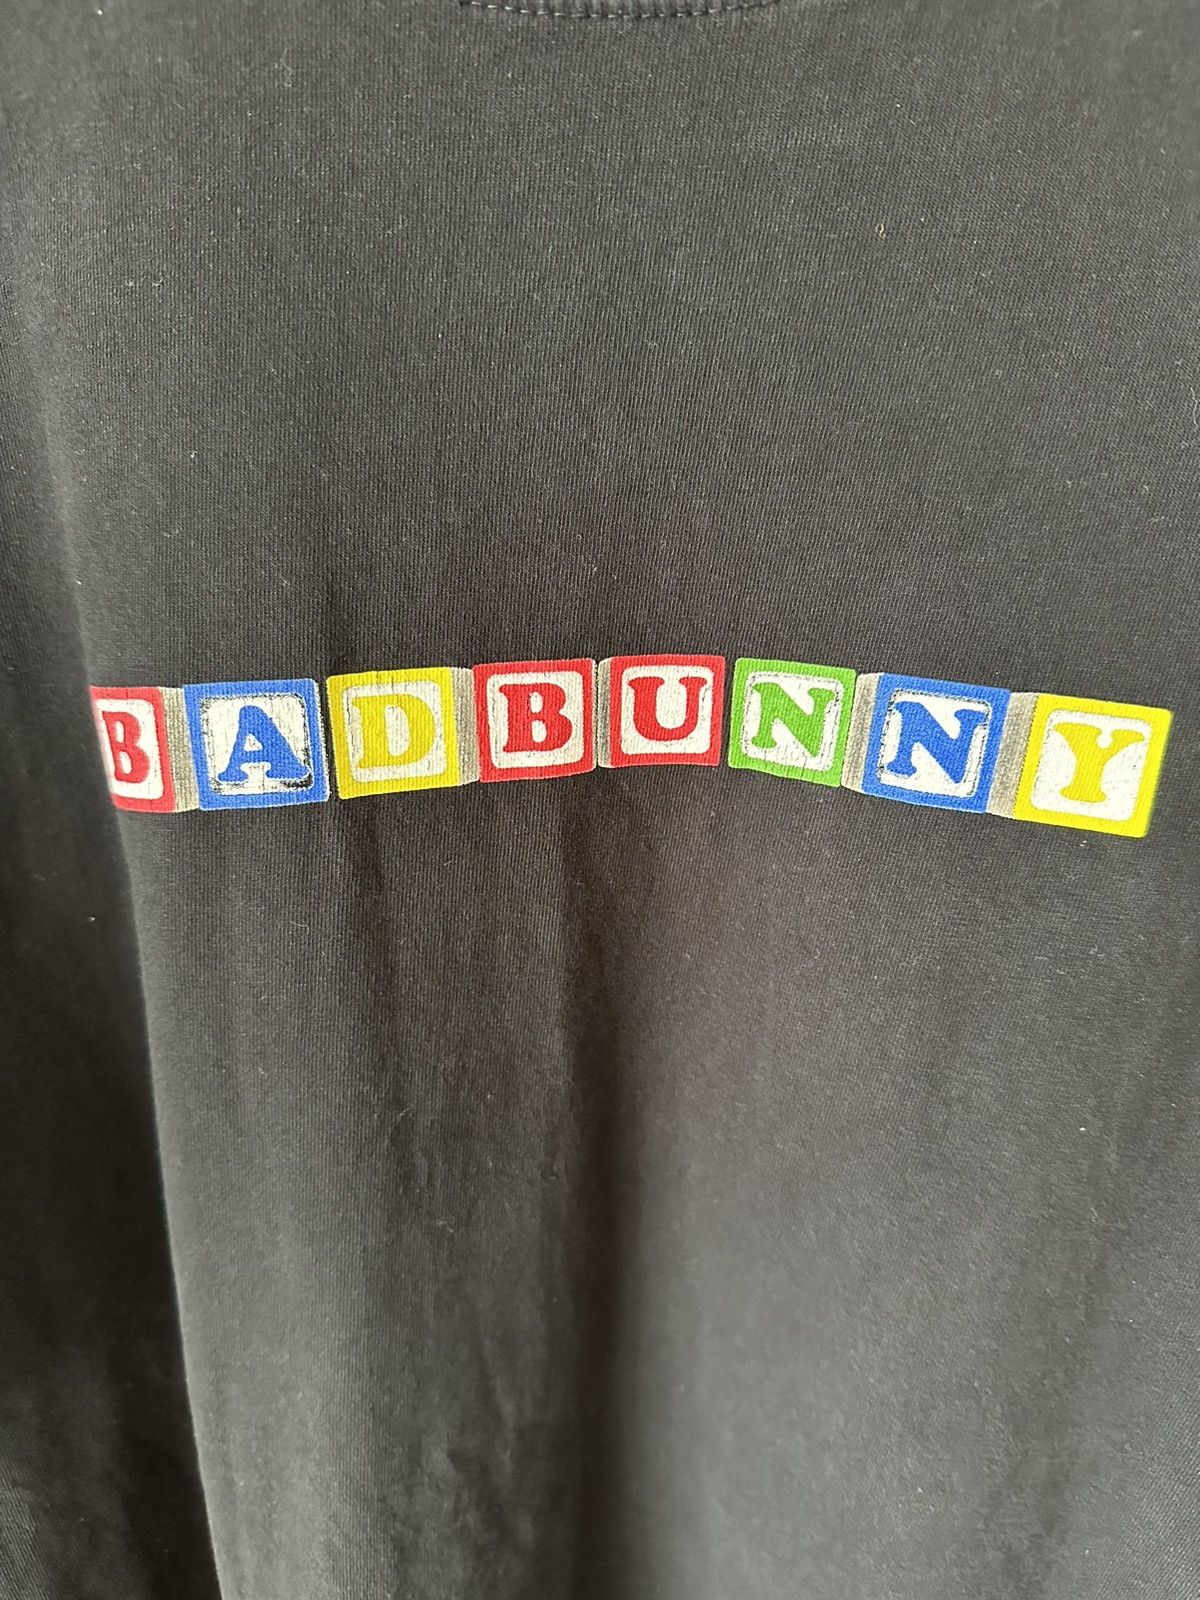 Rock Tees Bad Bunny YHLQMDLG Blocks Exclusive Tour Merchandise Shirt Size US XL / EU 56 / 4 - 2 Preview